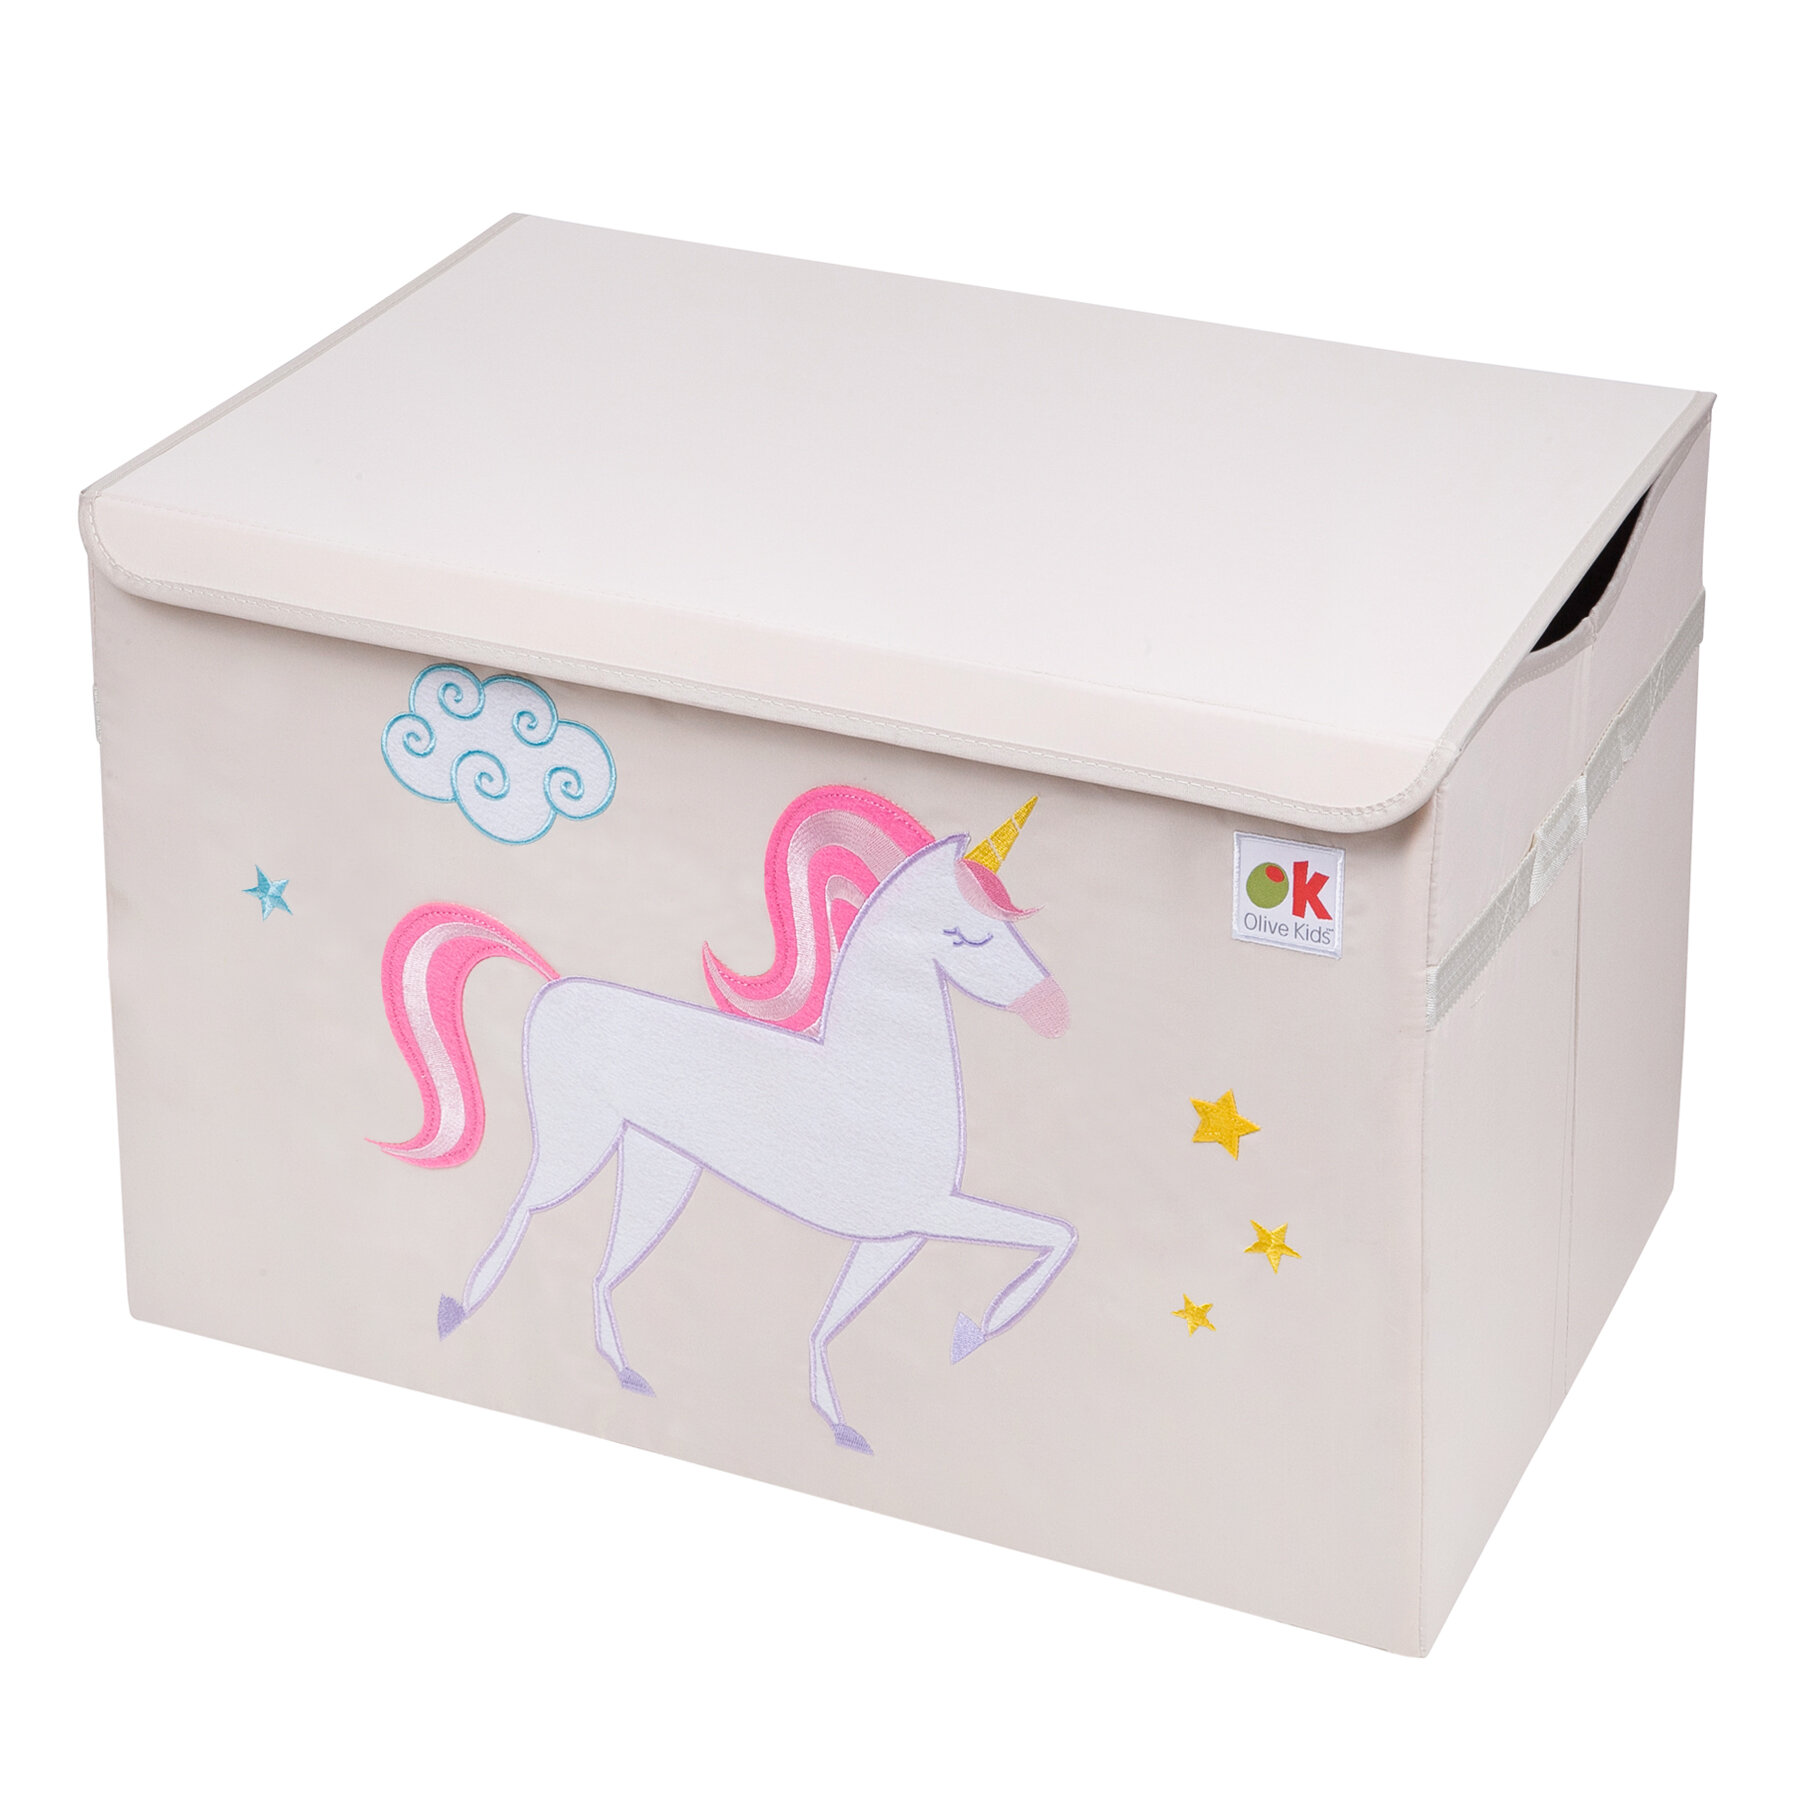 unicorn storage bin